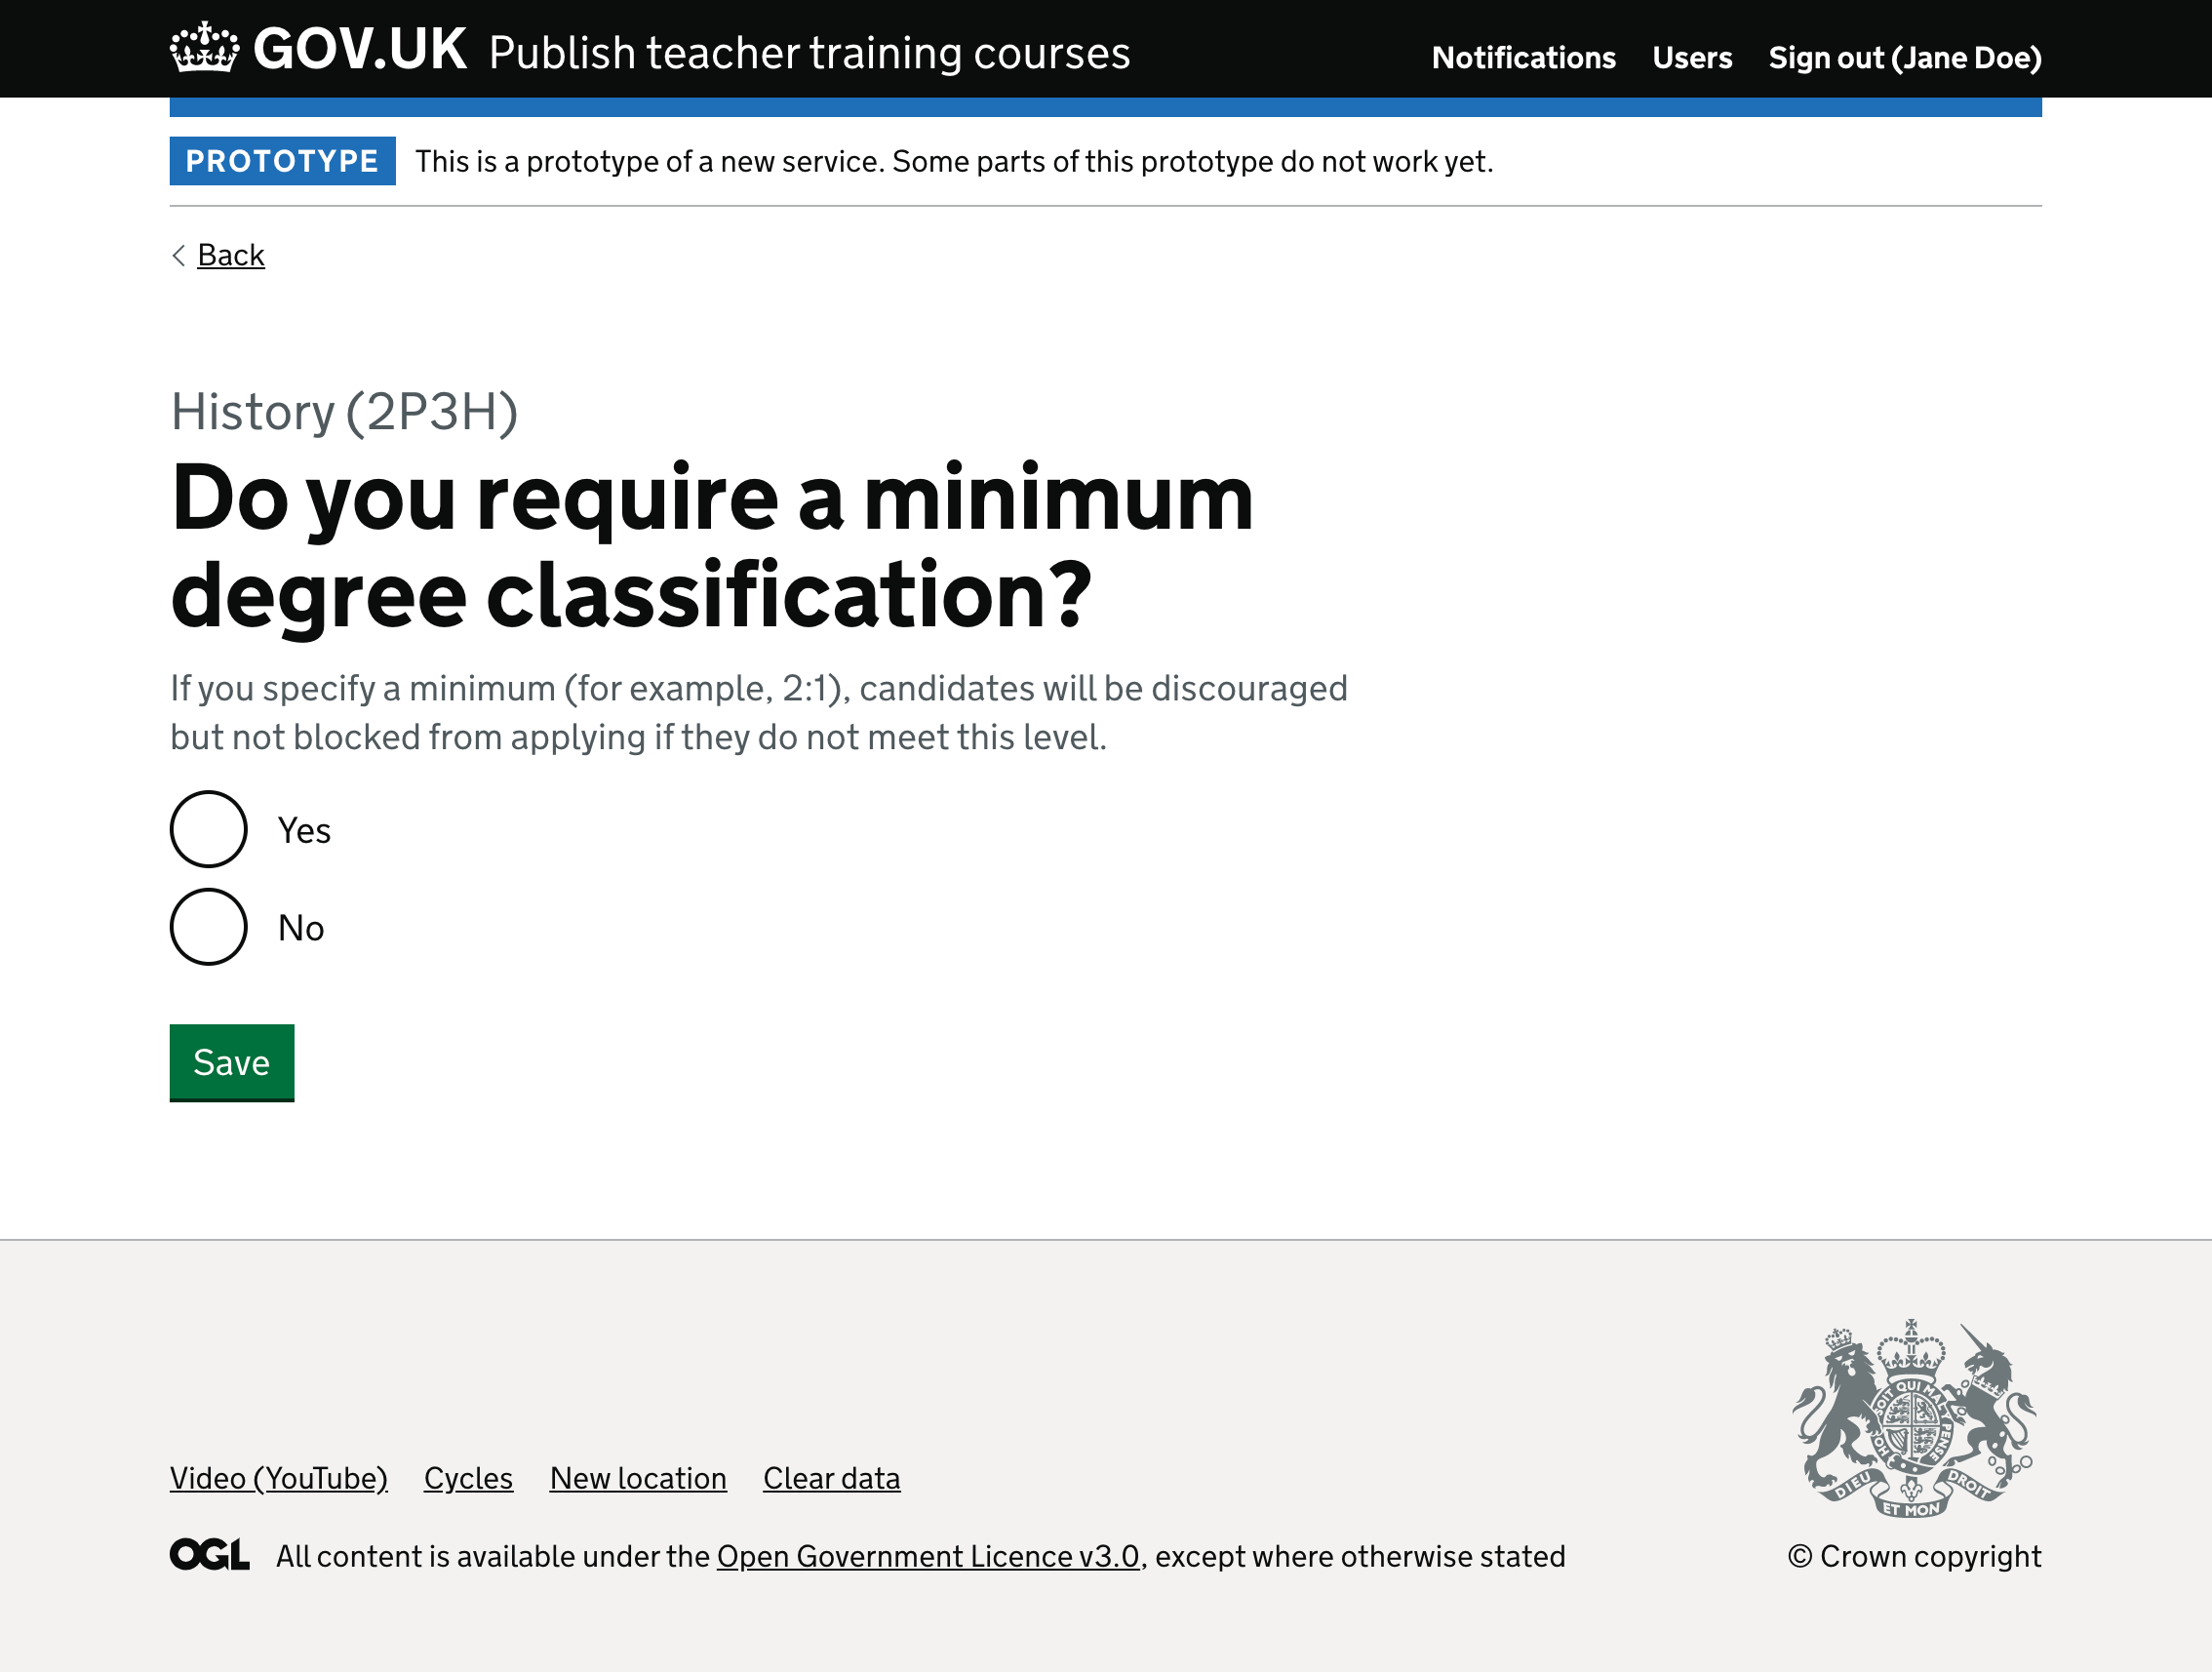 Screenshot of ‘Do you require a minimum degree classification?’ form.